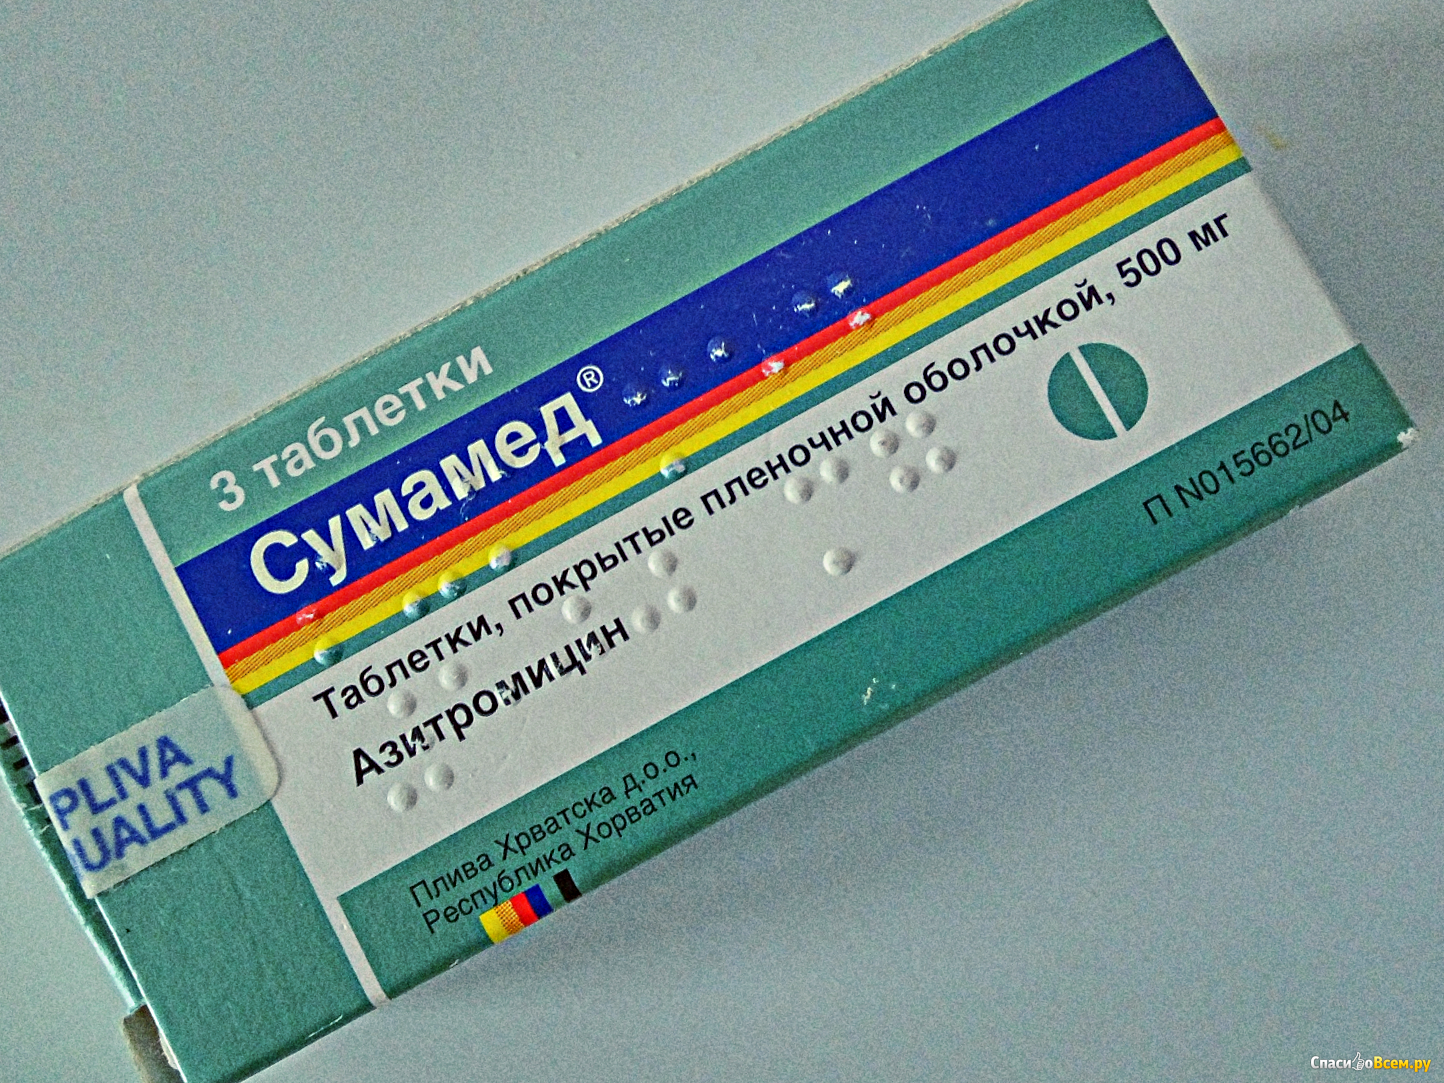 Антибиотики препараты недорогие но эффективные. Антибиотик Сумамед 3 таблетки. Антибиотик Sumamed 3 таблетки. Антибиотики от гриппа и ОРВИ. Антибиотик от гриппа взрослым.